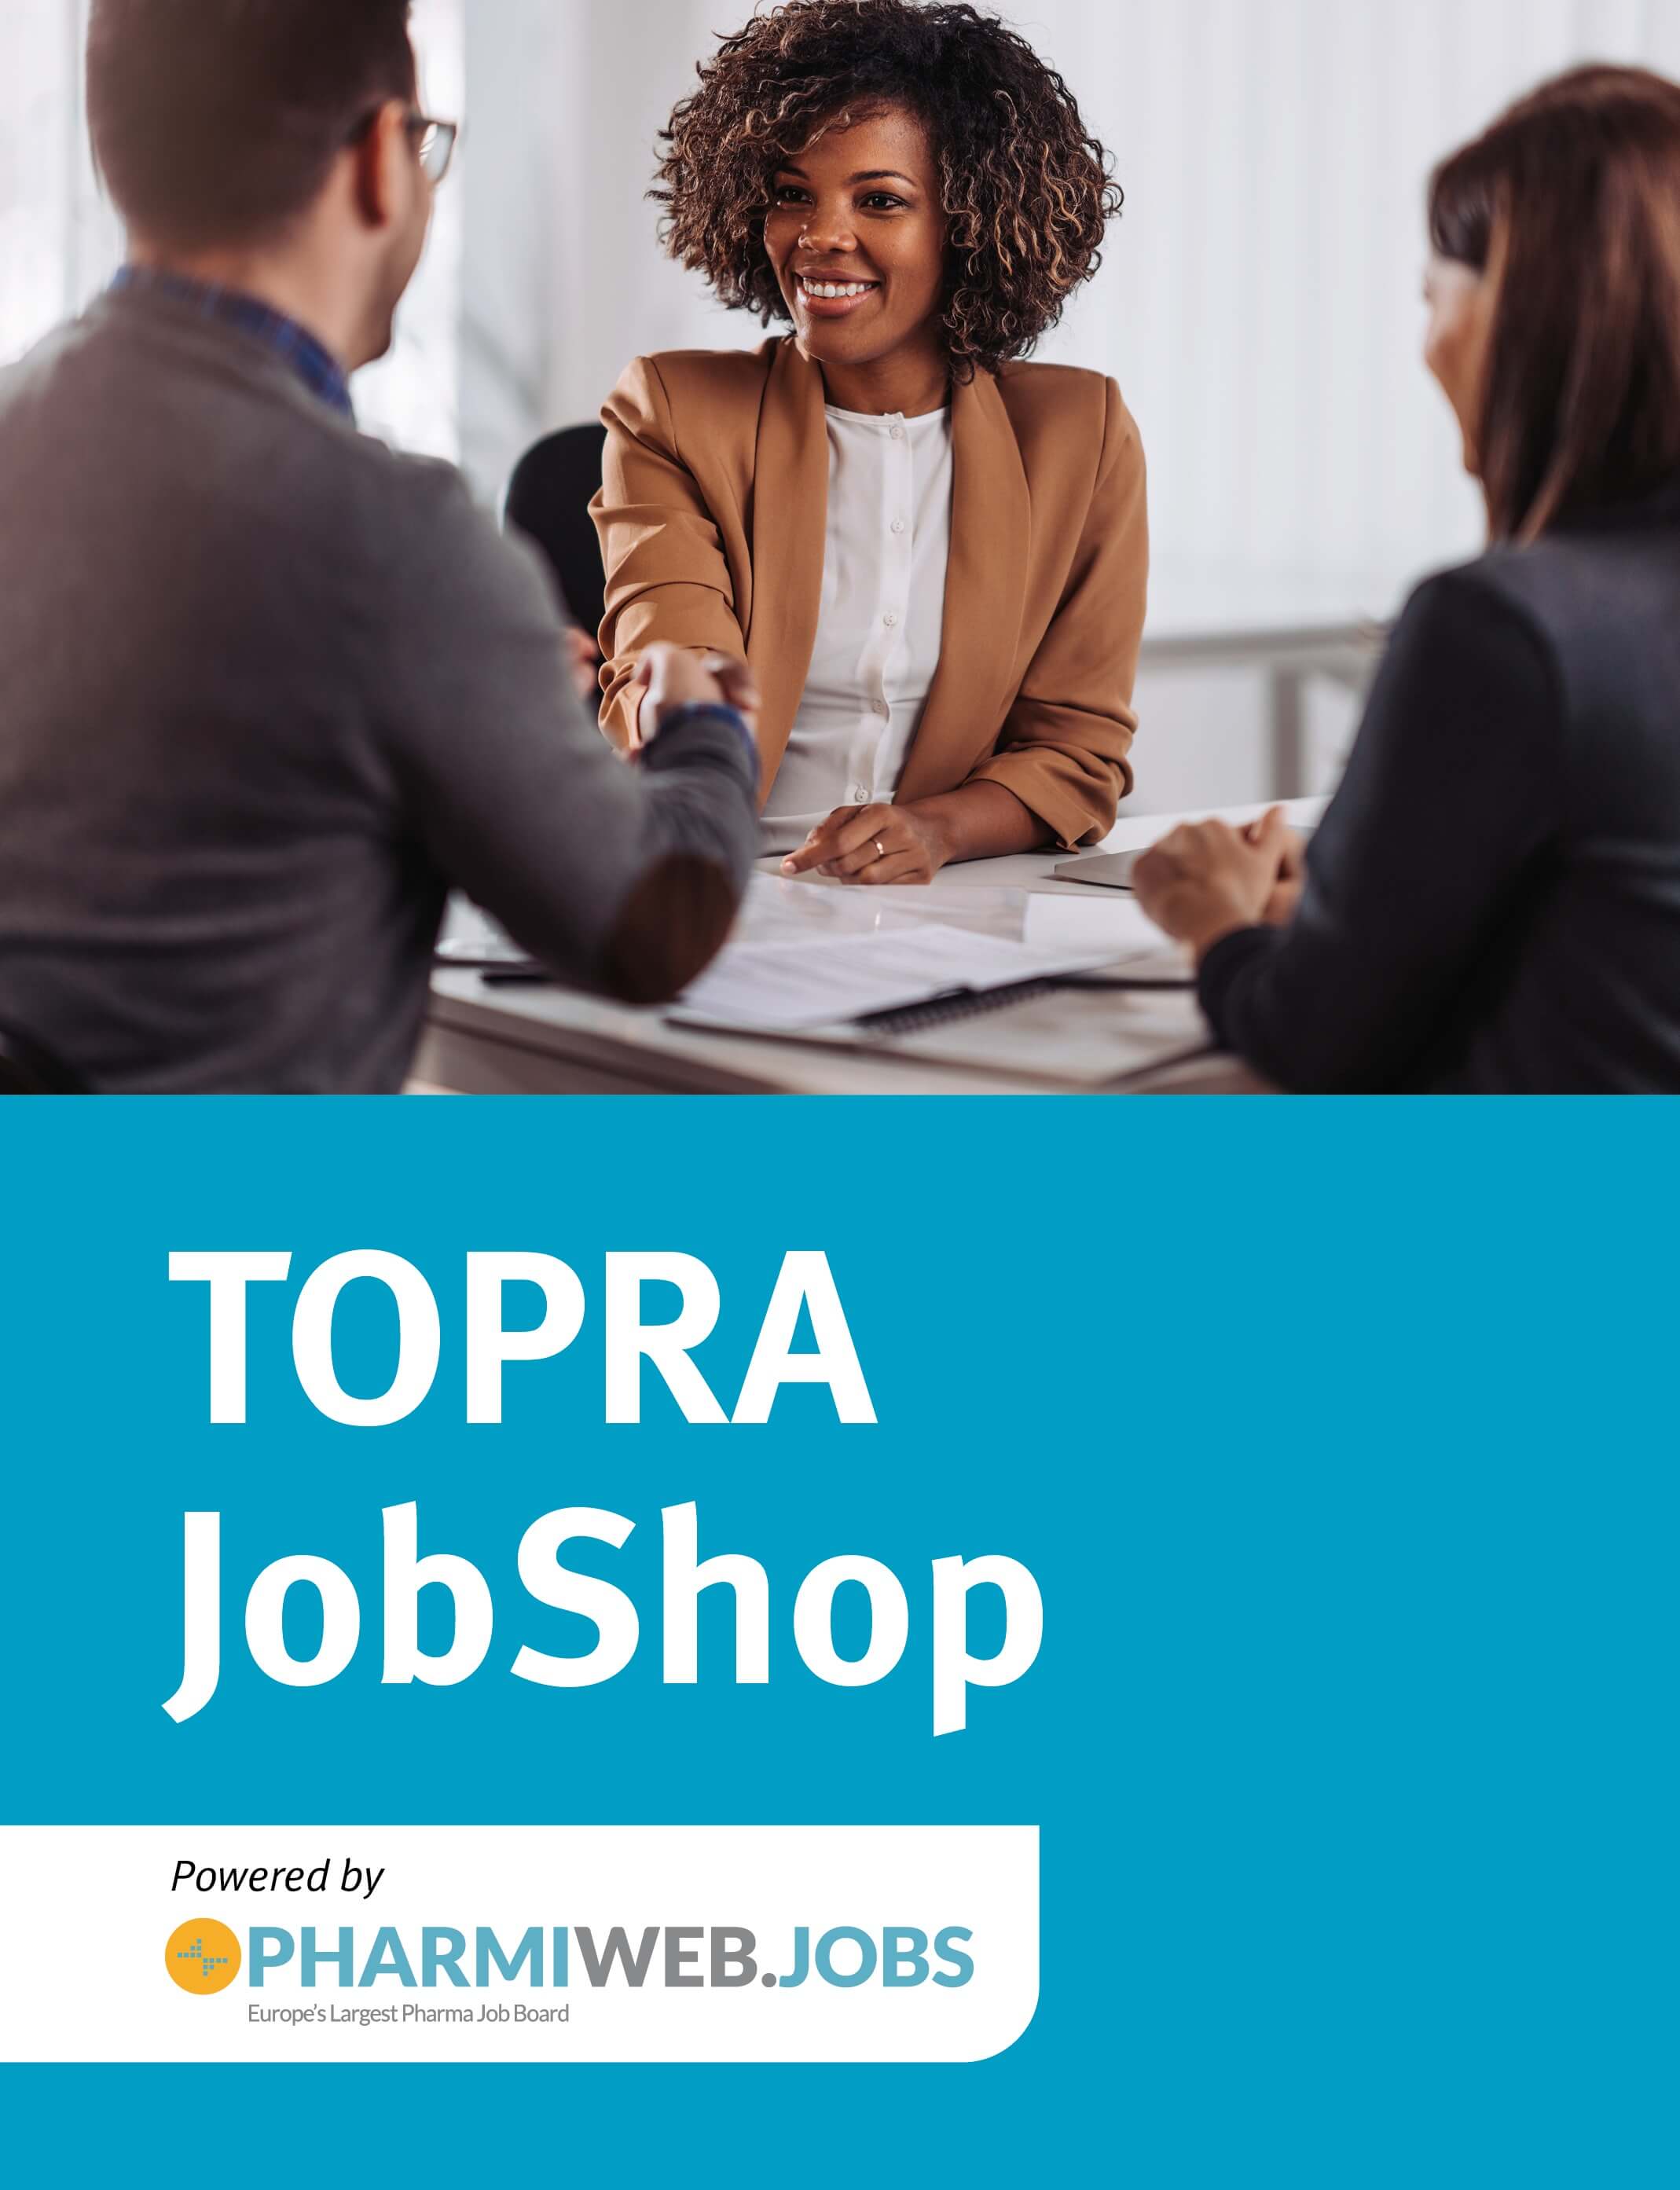 TOPRA Job Shop powered by PharmiWeb